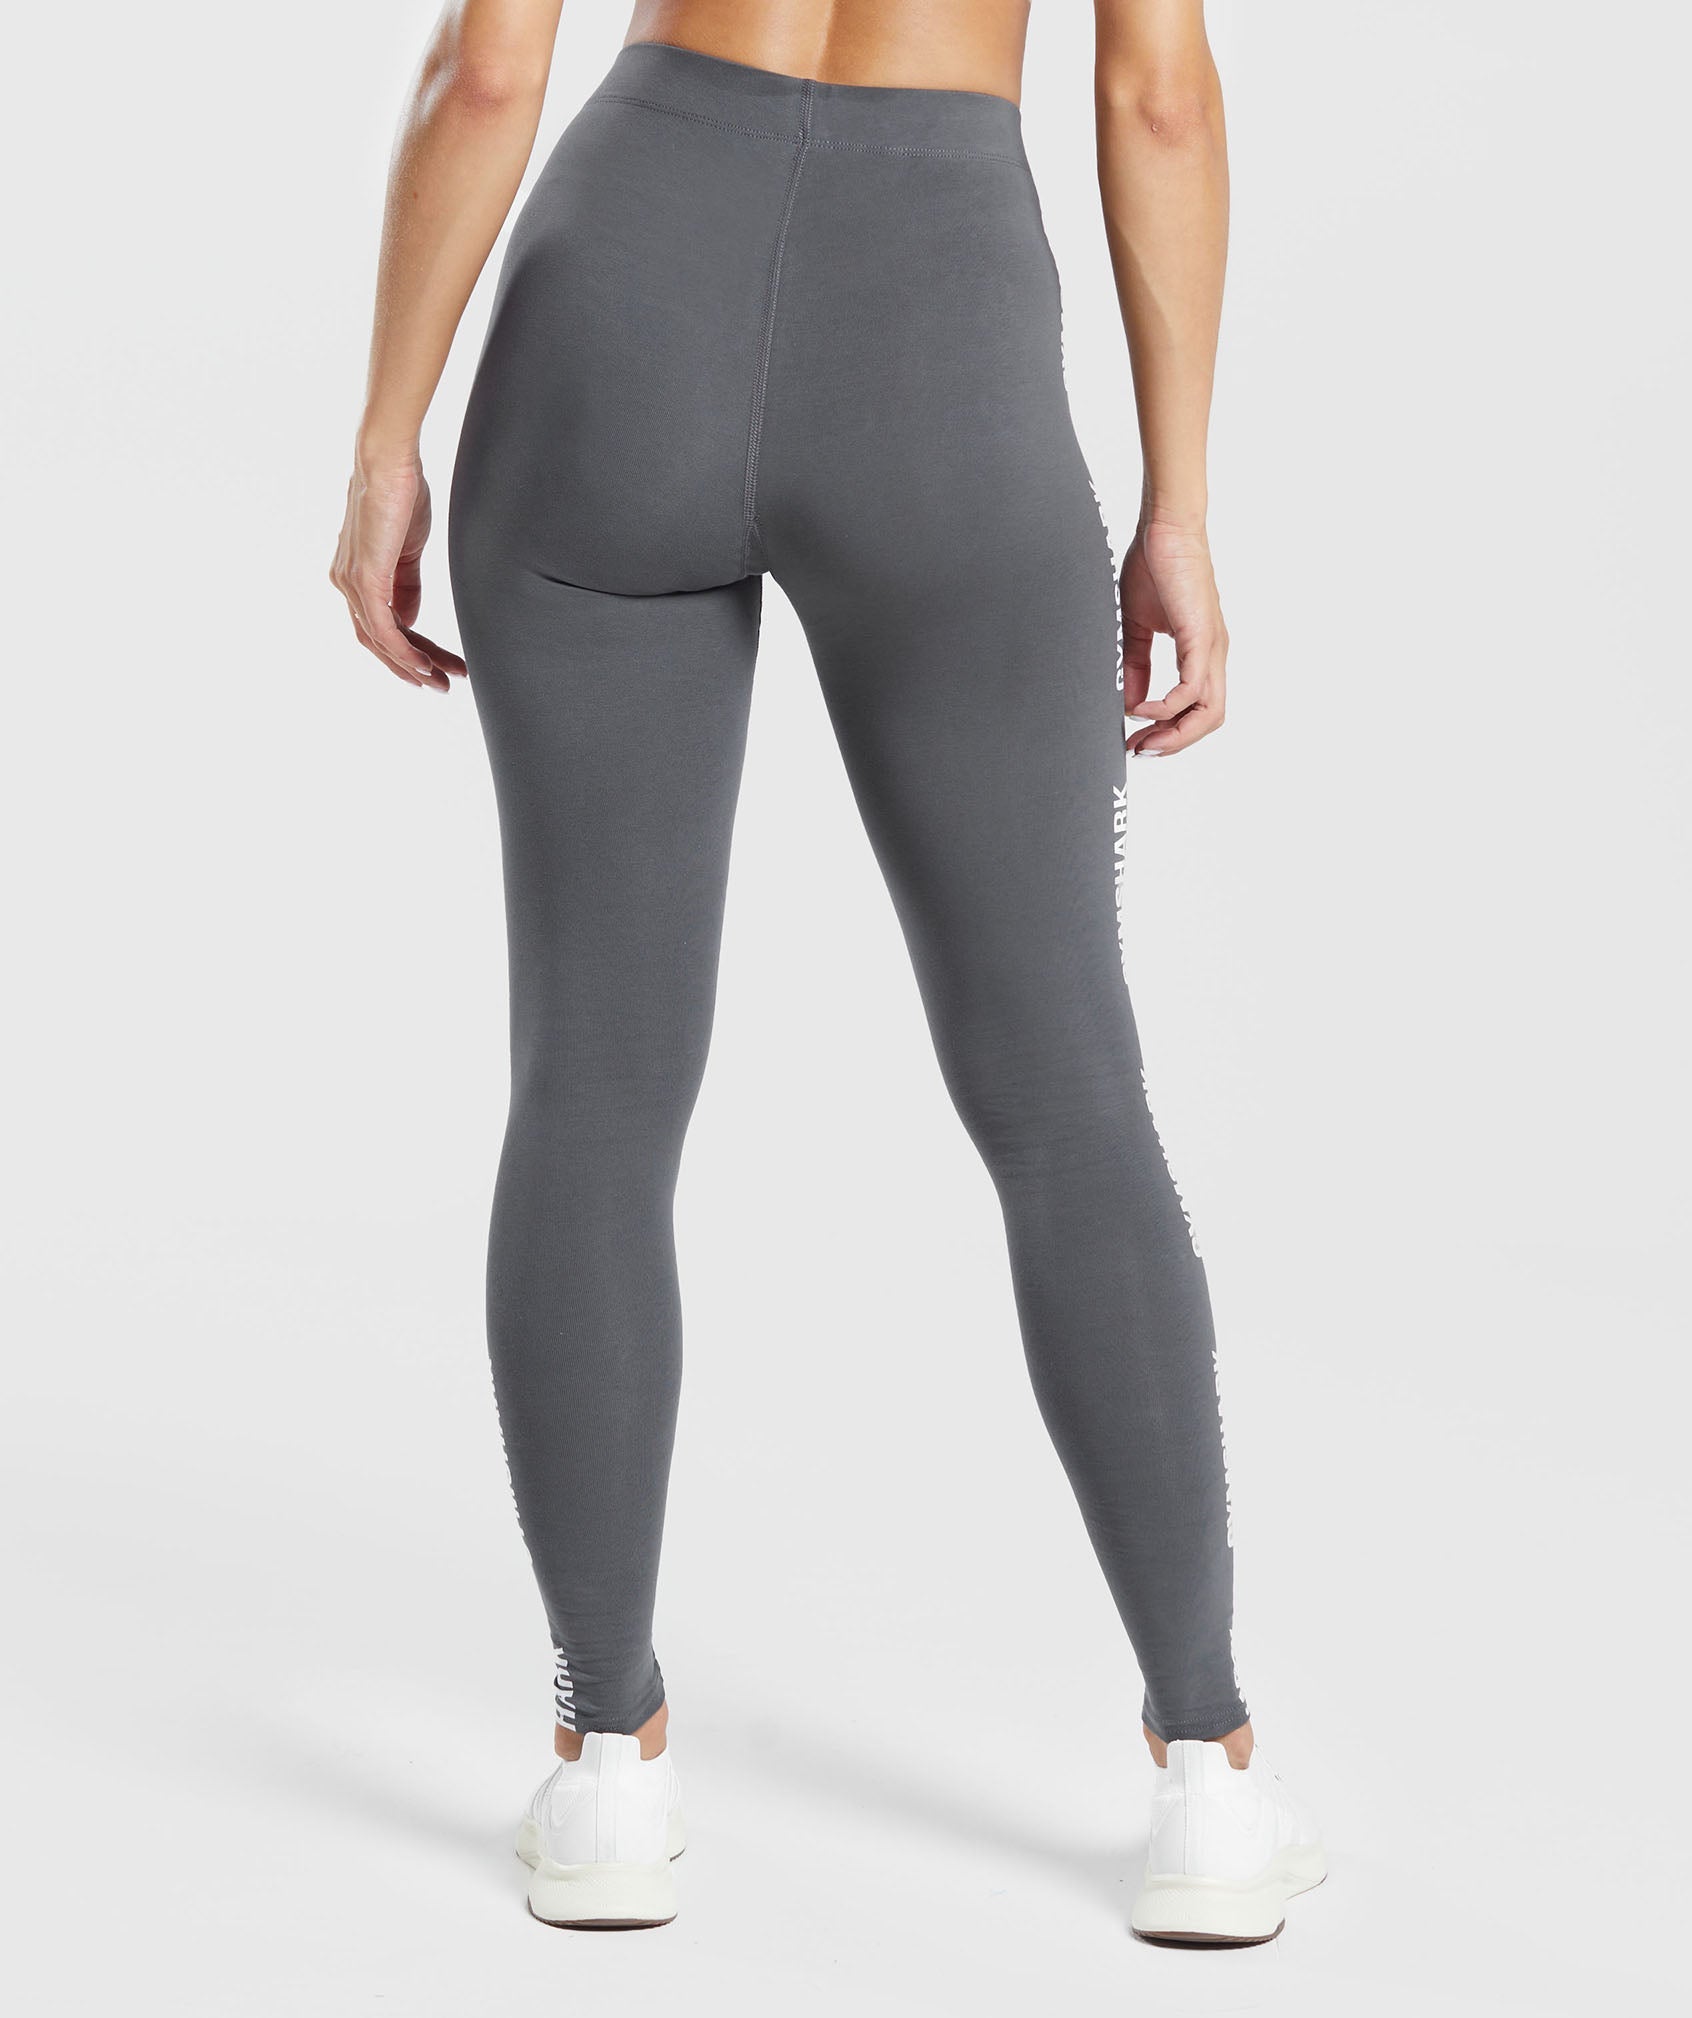 Gymshark Cotton Graphic Tape Leggings - Graphite Grey